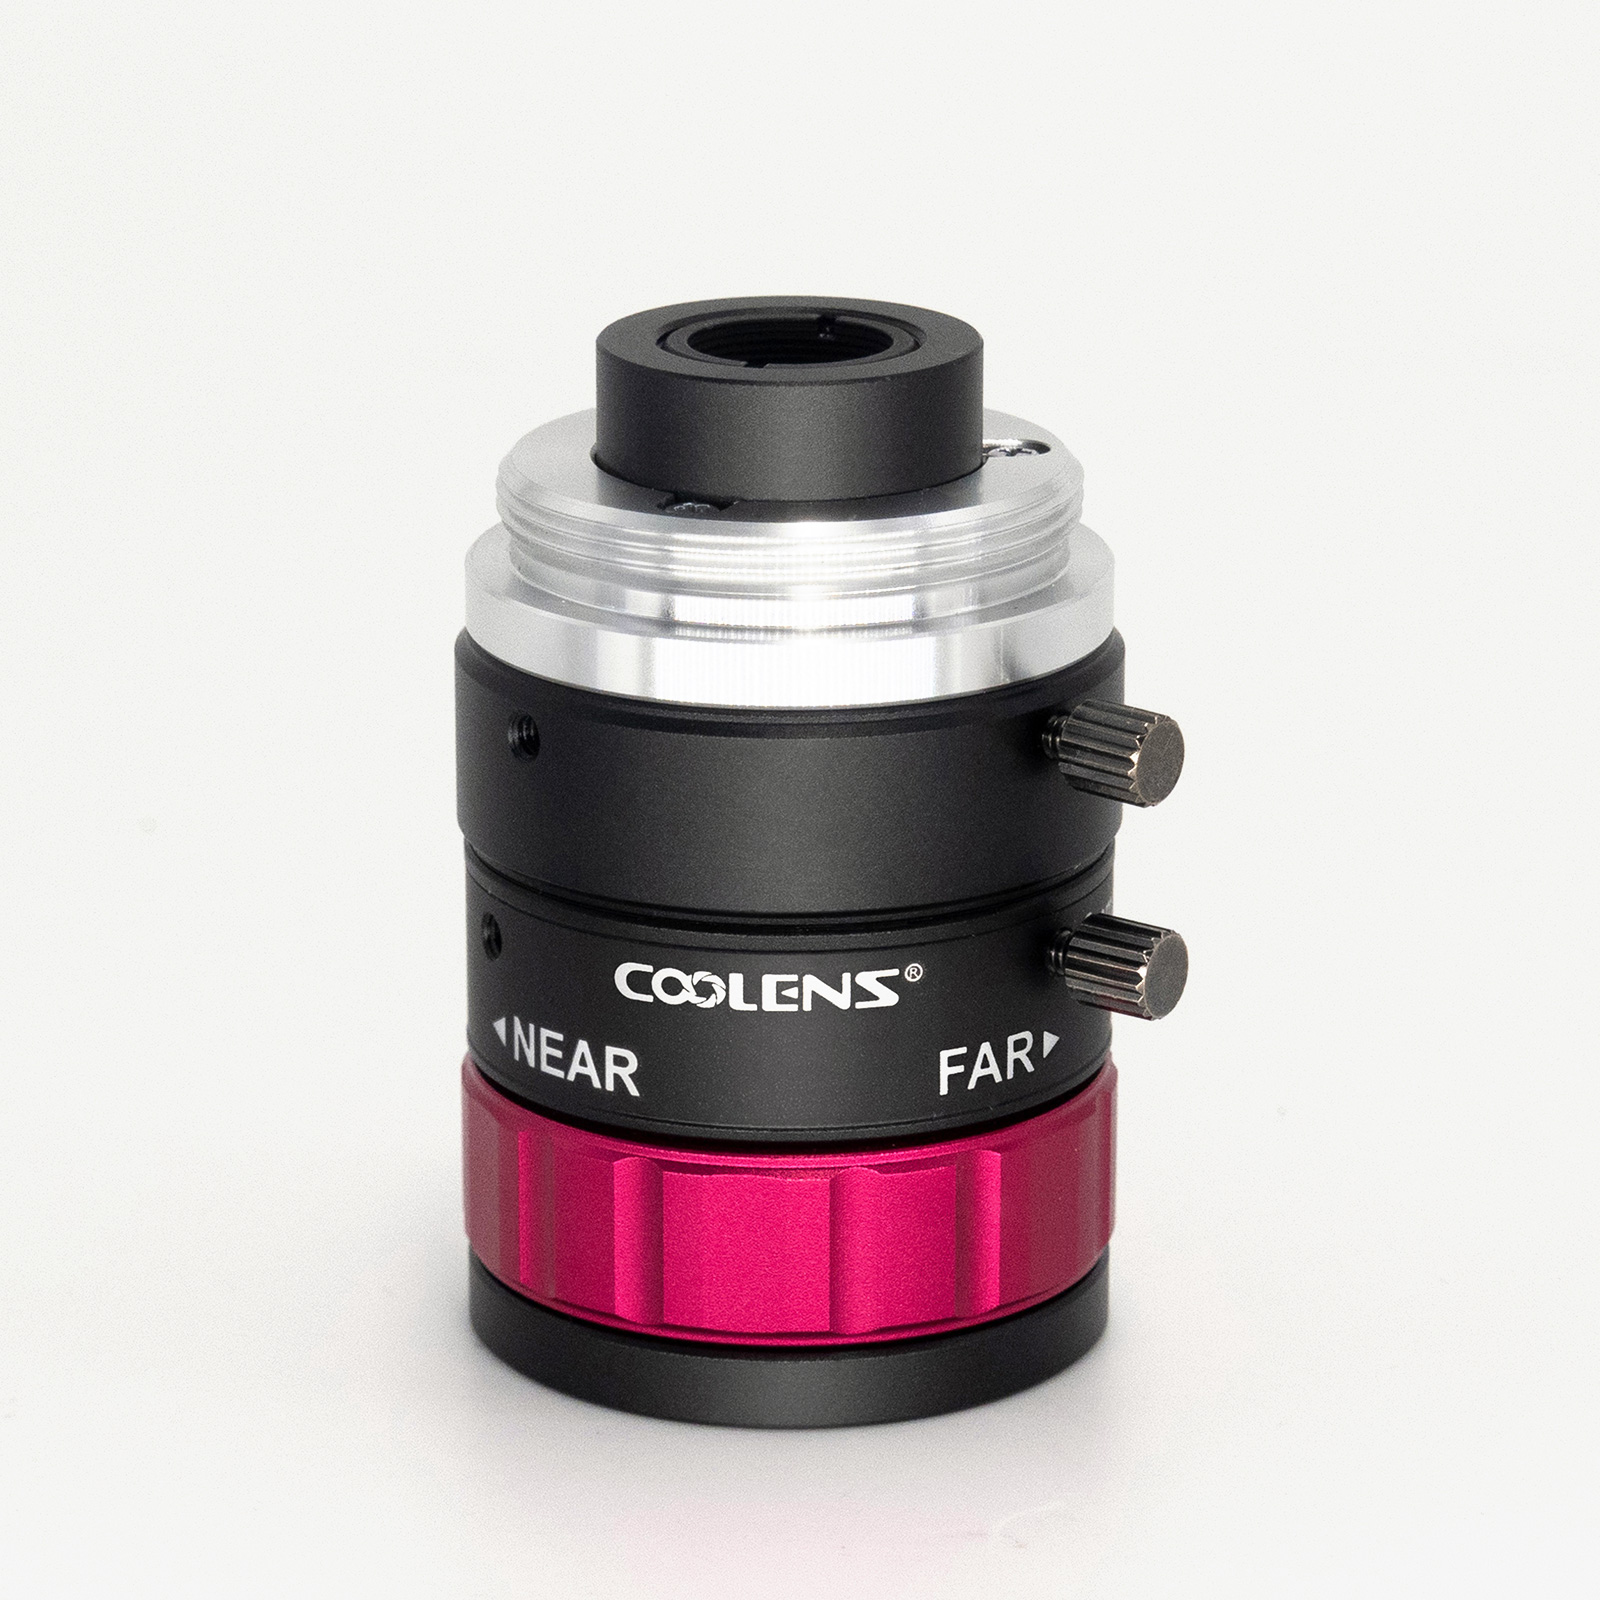 1/1.8" f8 Fixed Focus Lens